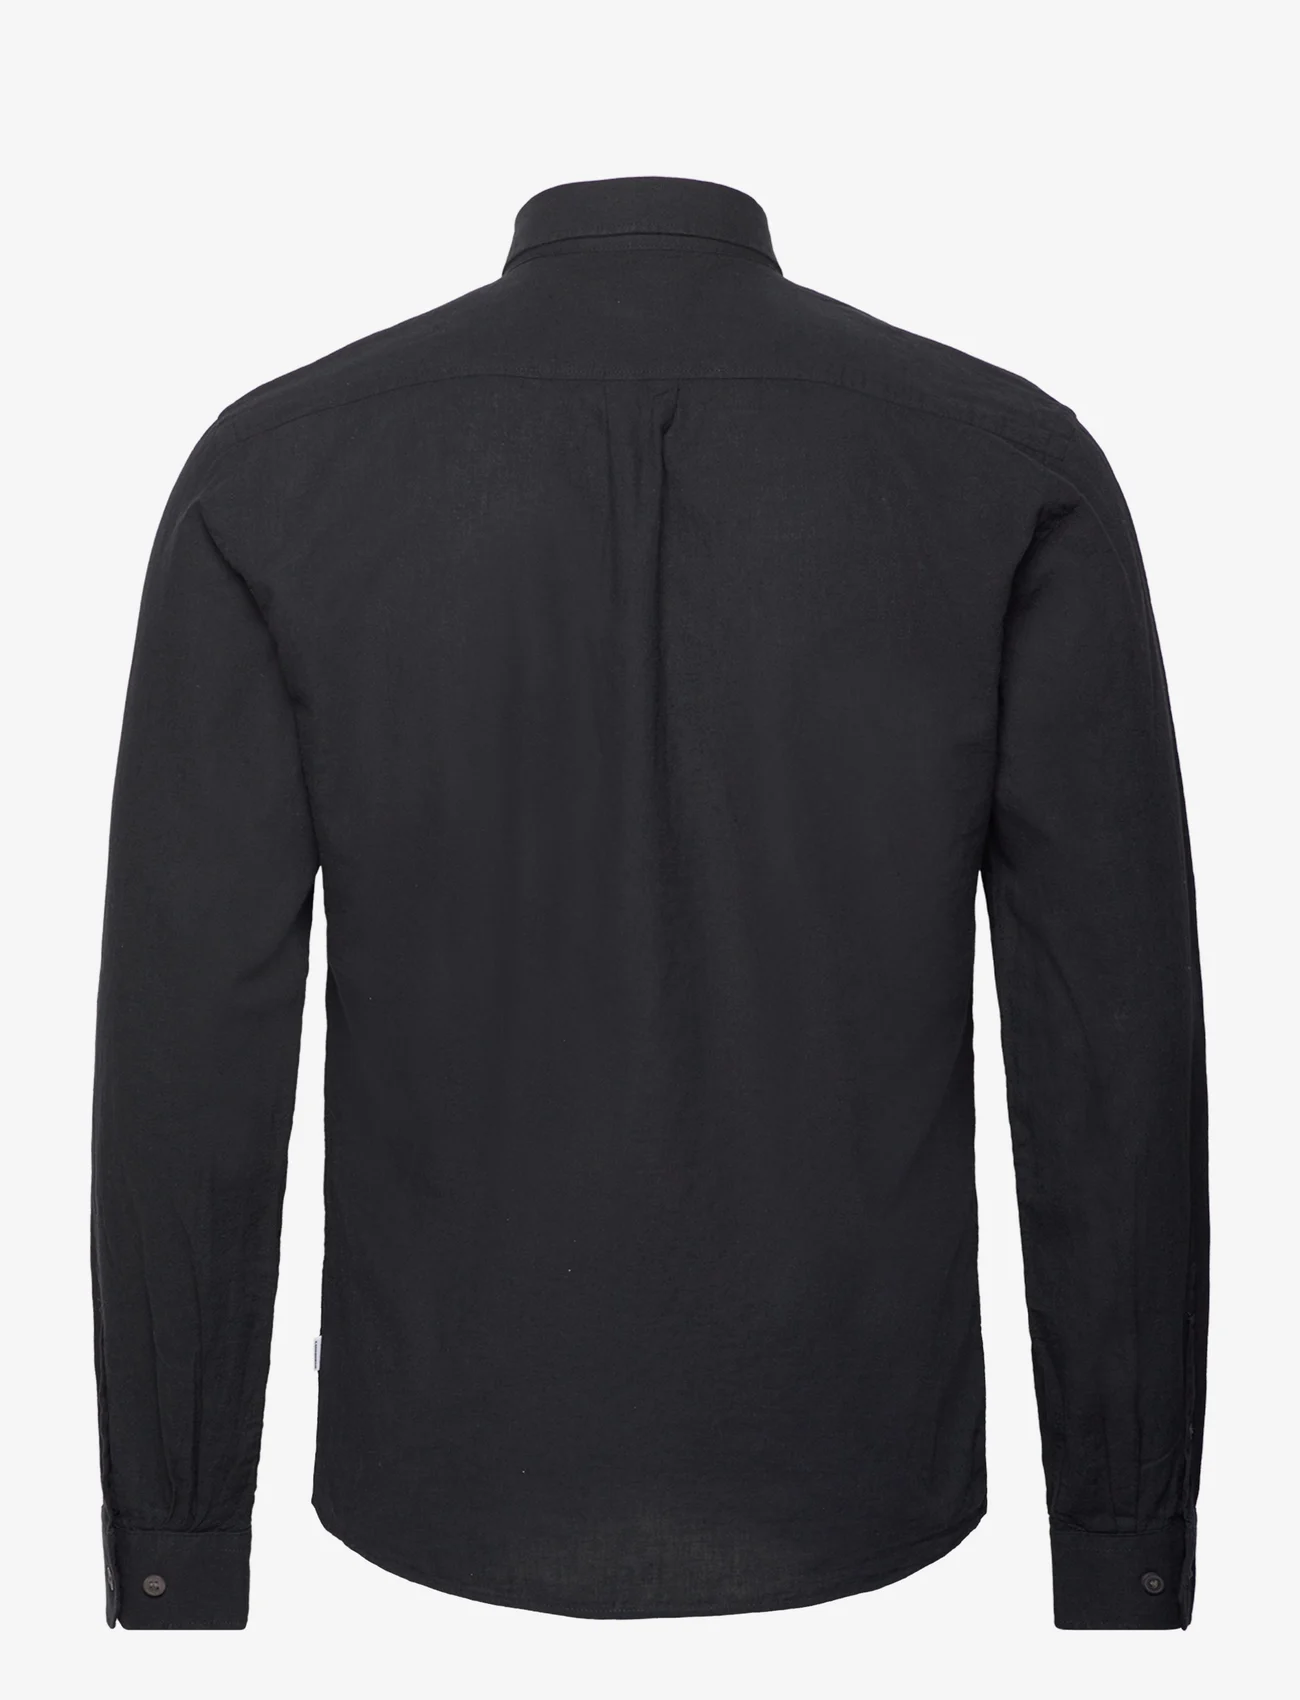 Lindbergh - Linen/cotton shirt L/S - linen shirts - black - 1